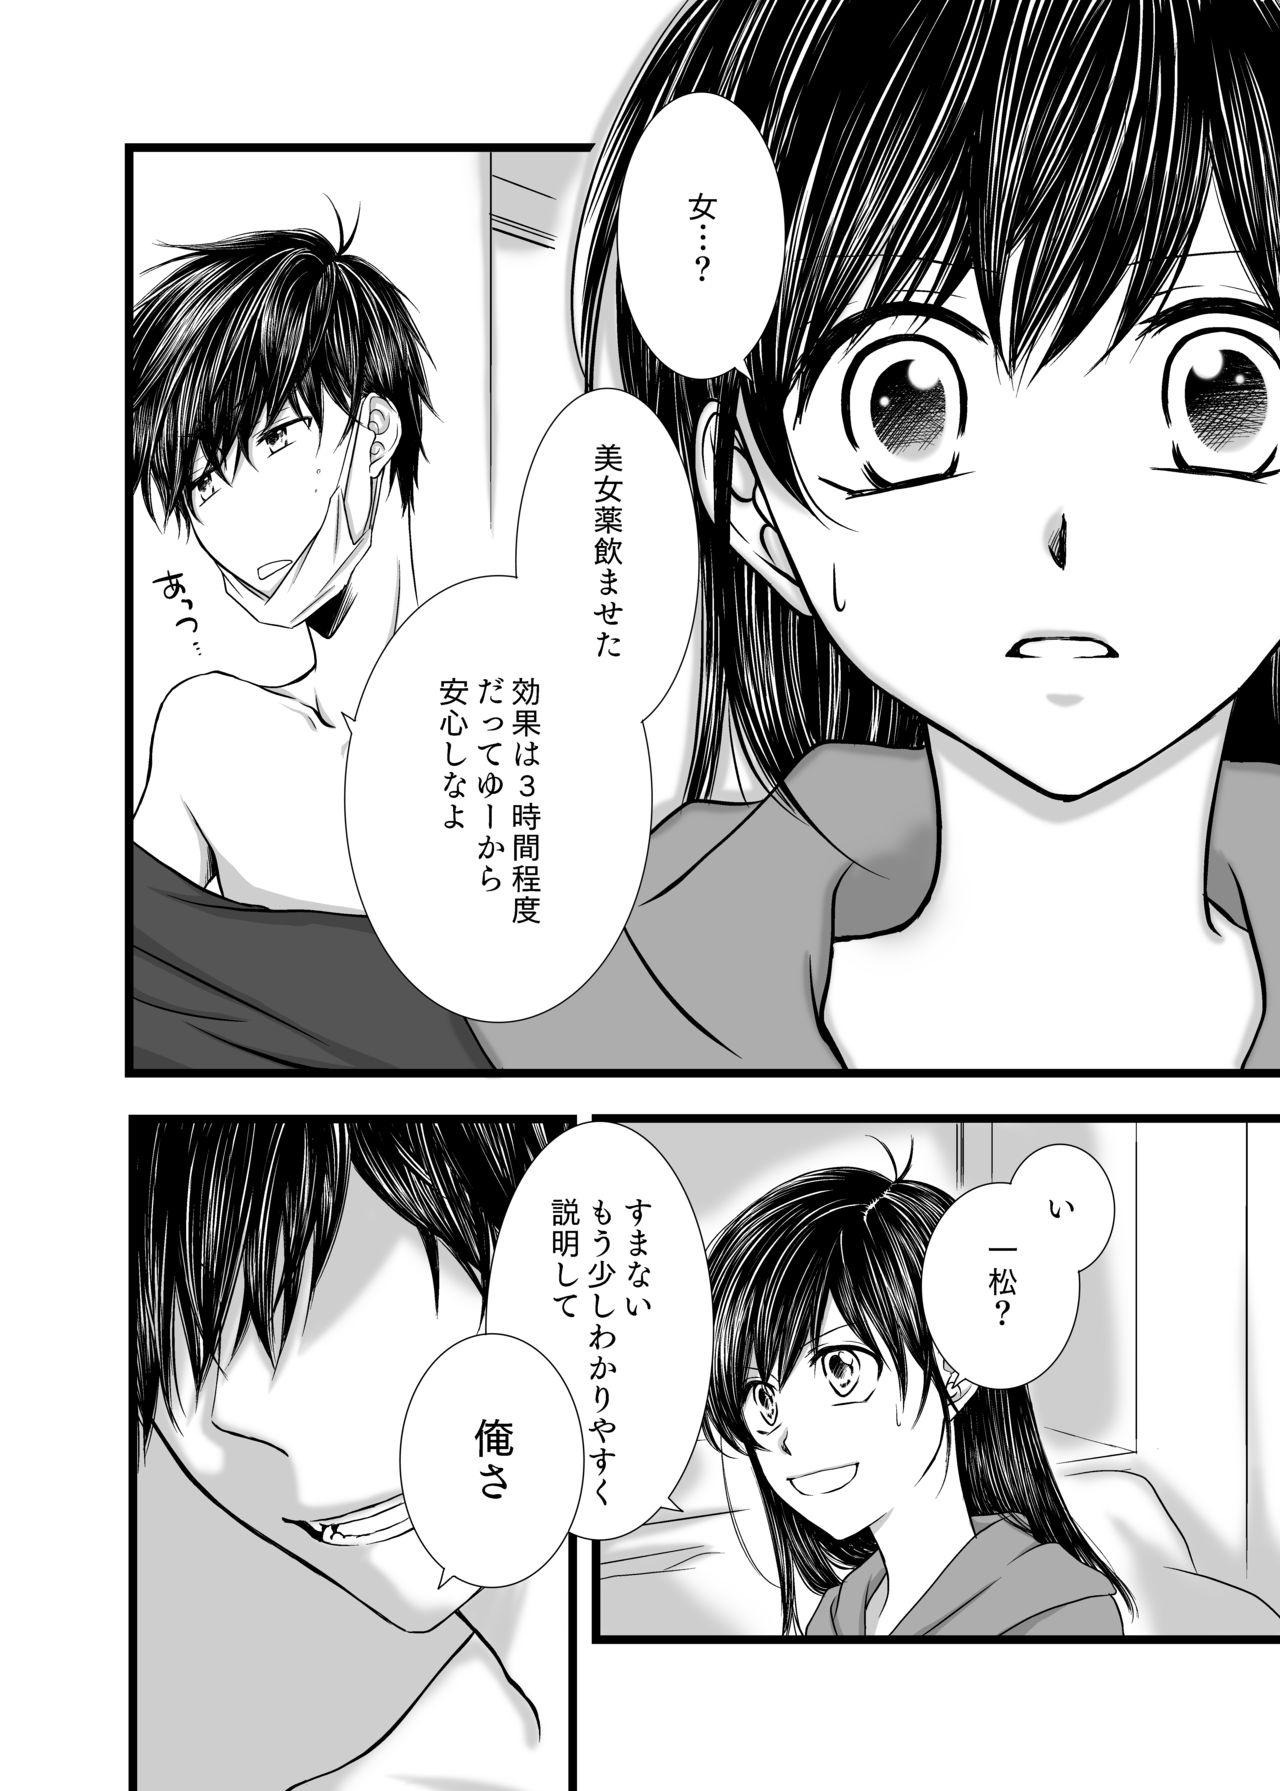 Huge Boobs 愛のカタチは。 - Osomatsu-san Gay Friend - Page 7